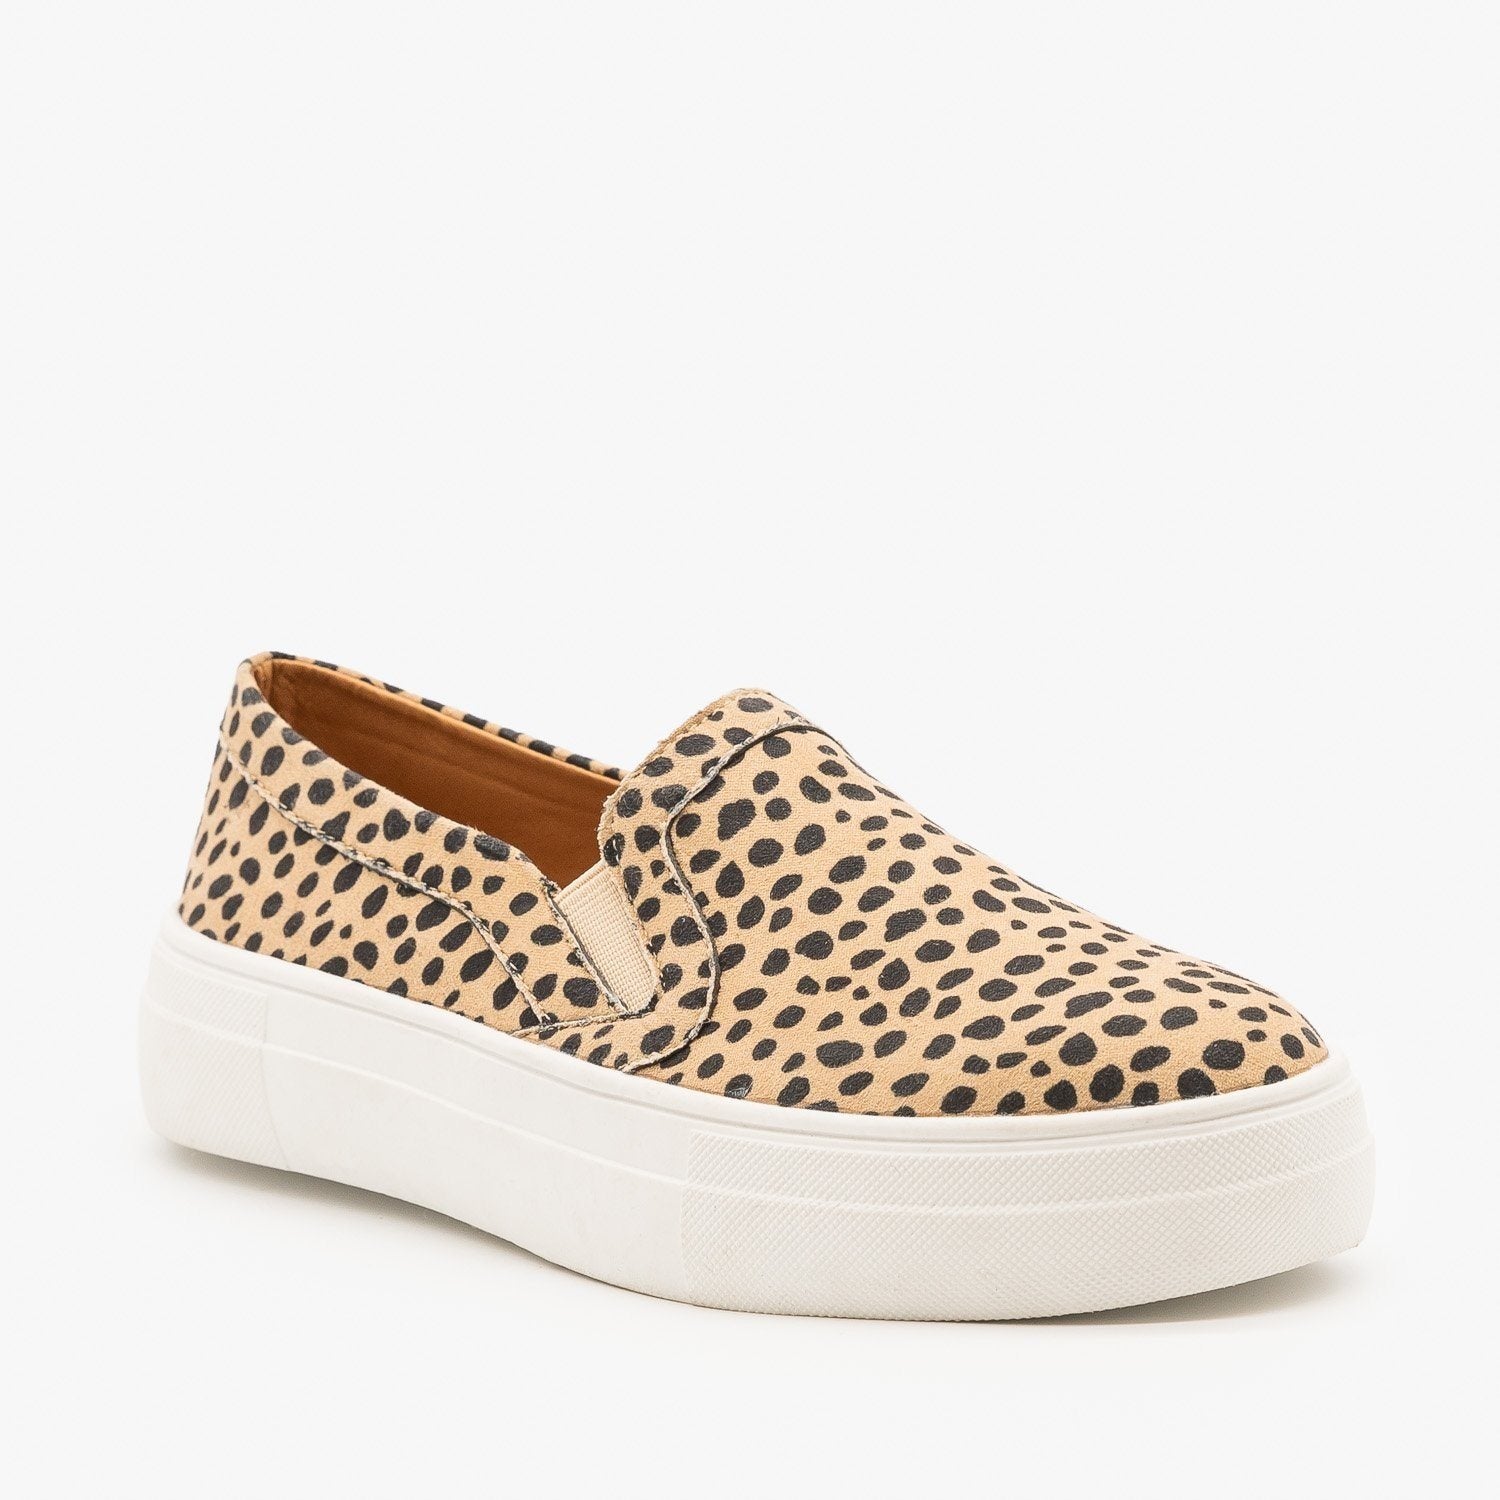 slip on cheetah shoes